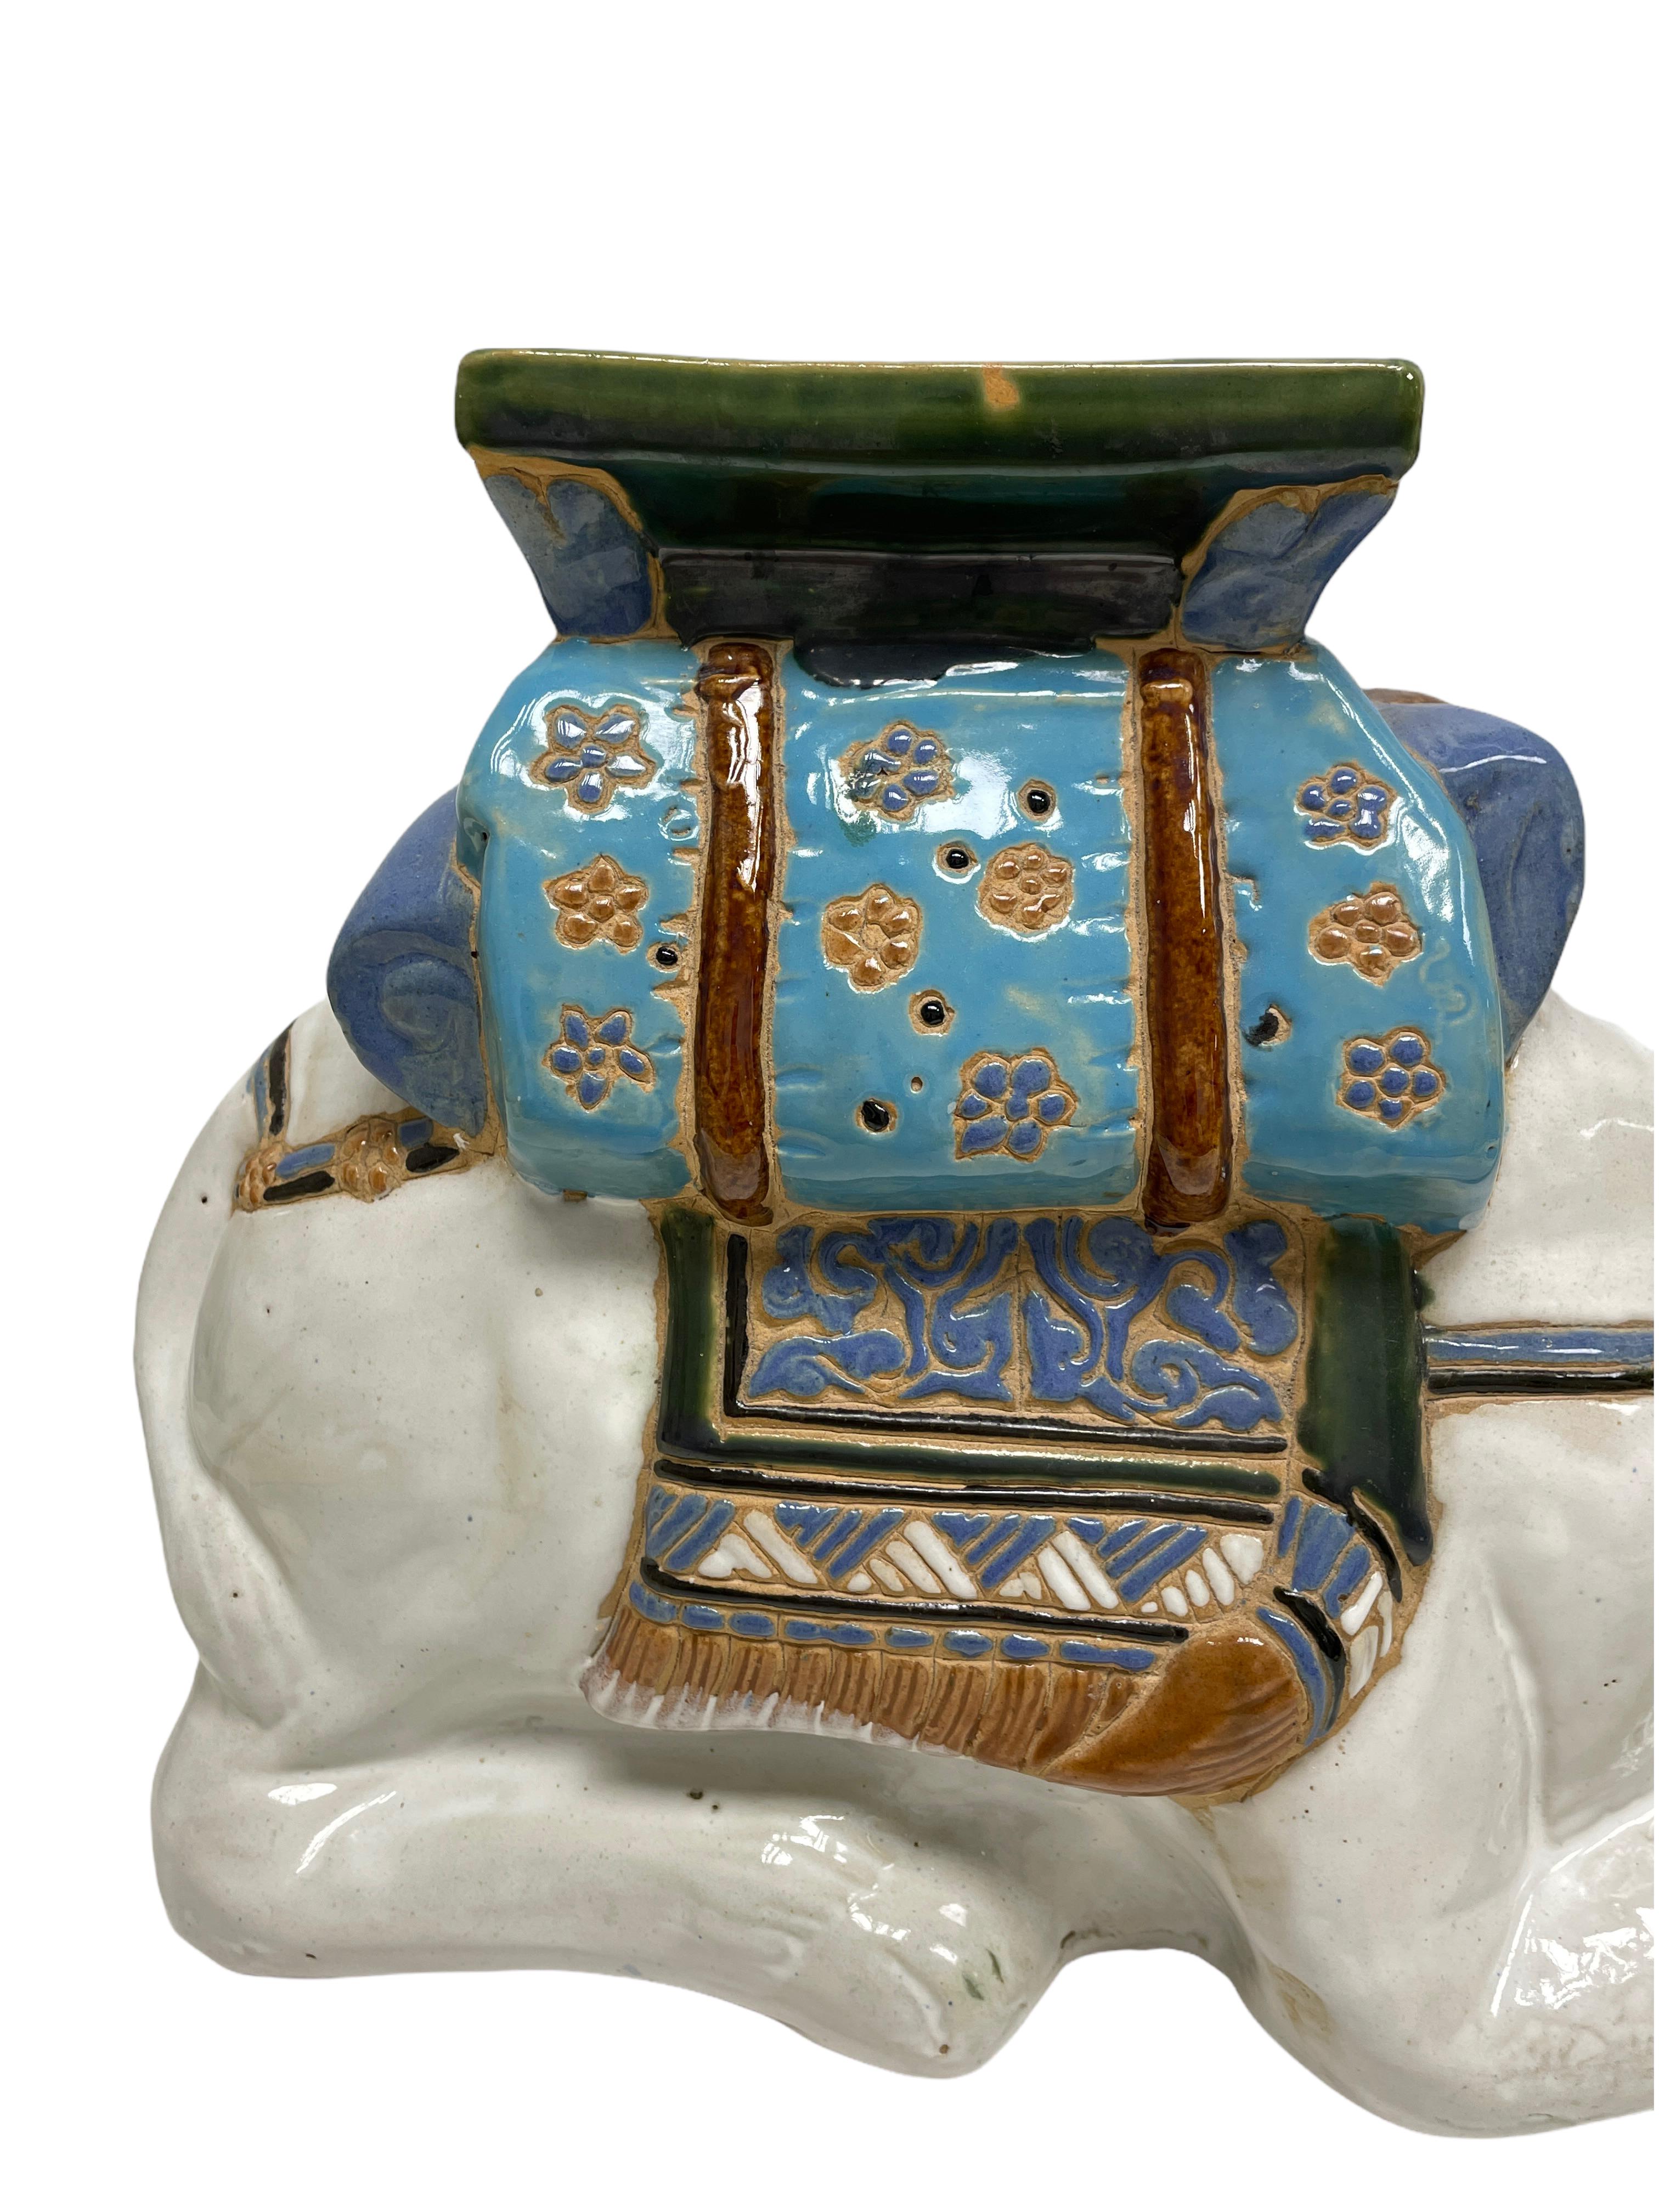 Patio Decoration Ceramic Hollywood Regency Camel Garden Flower Pot Stand Vintage 1